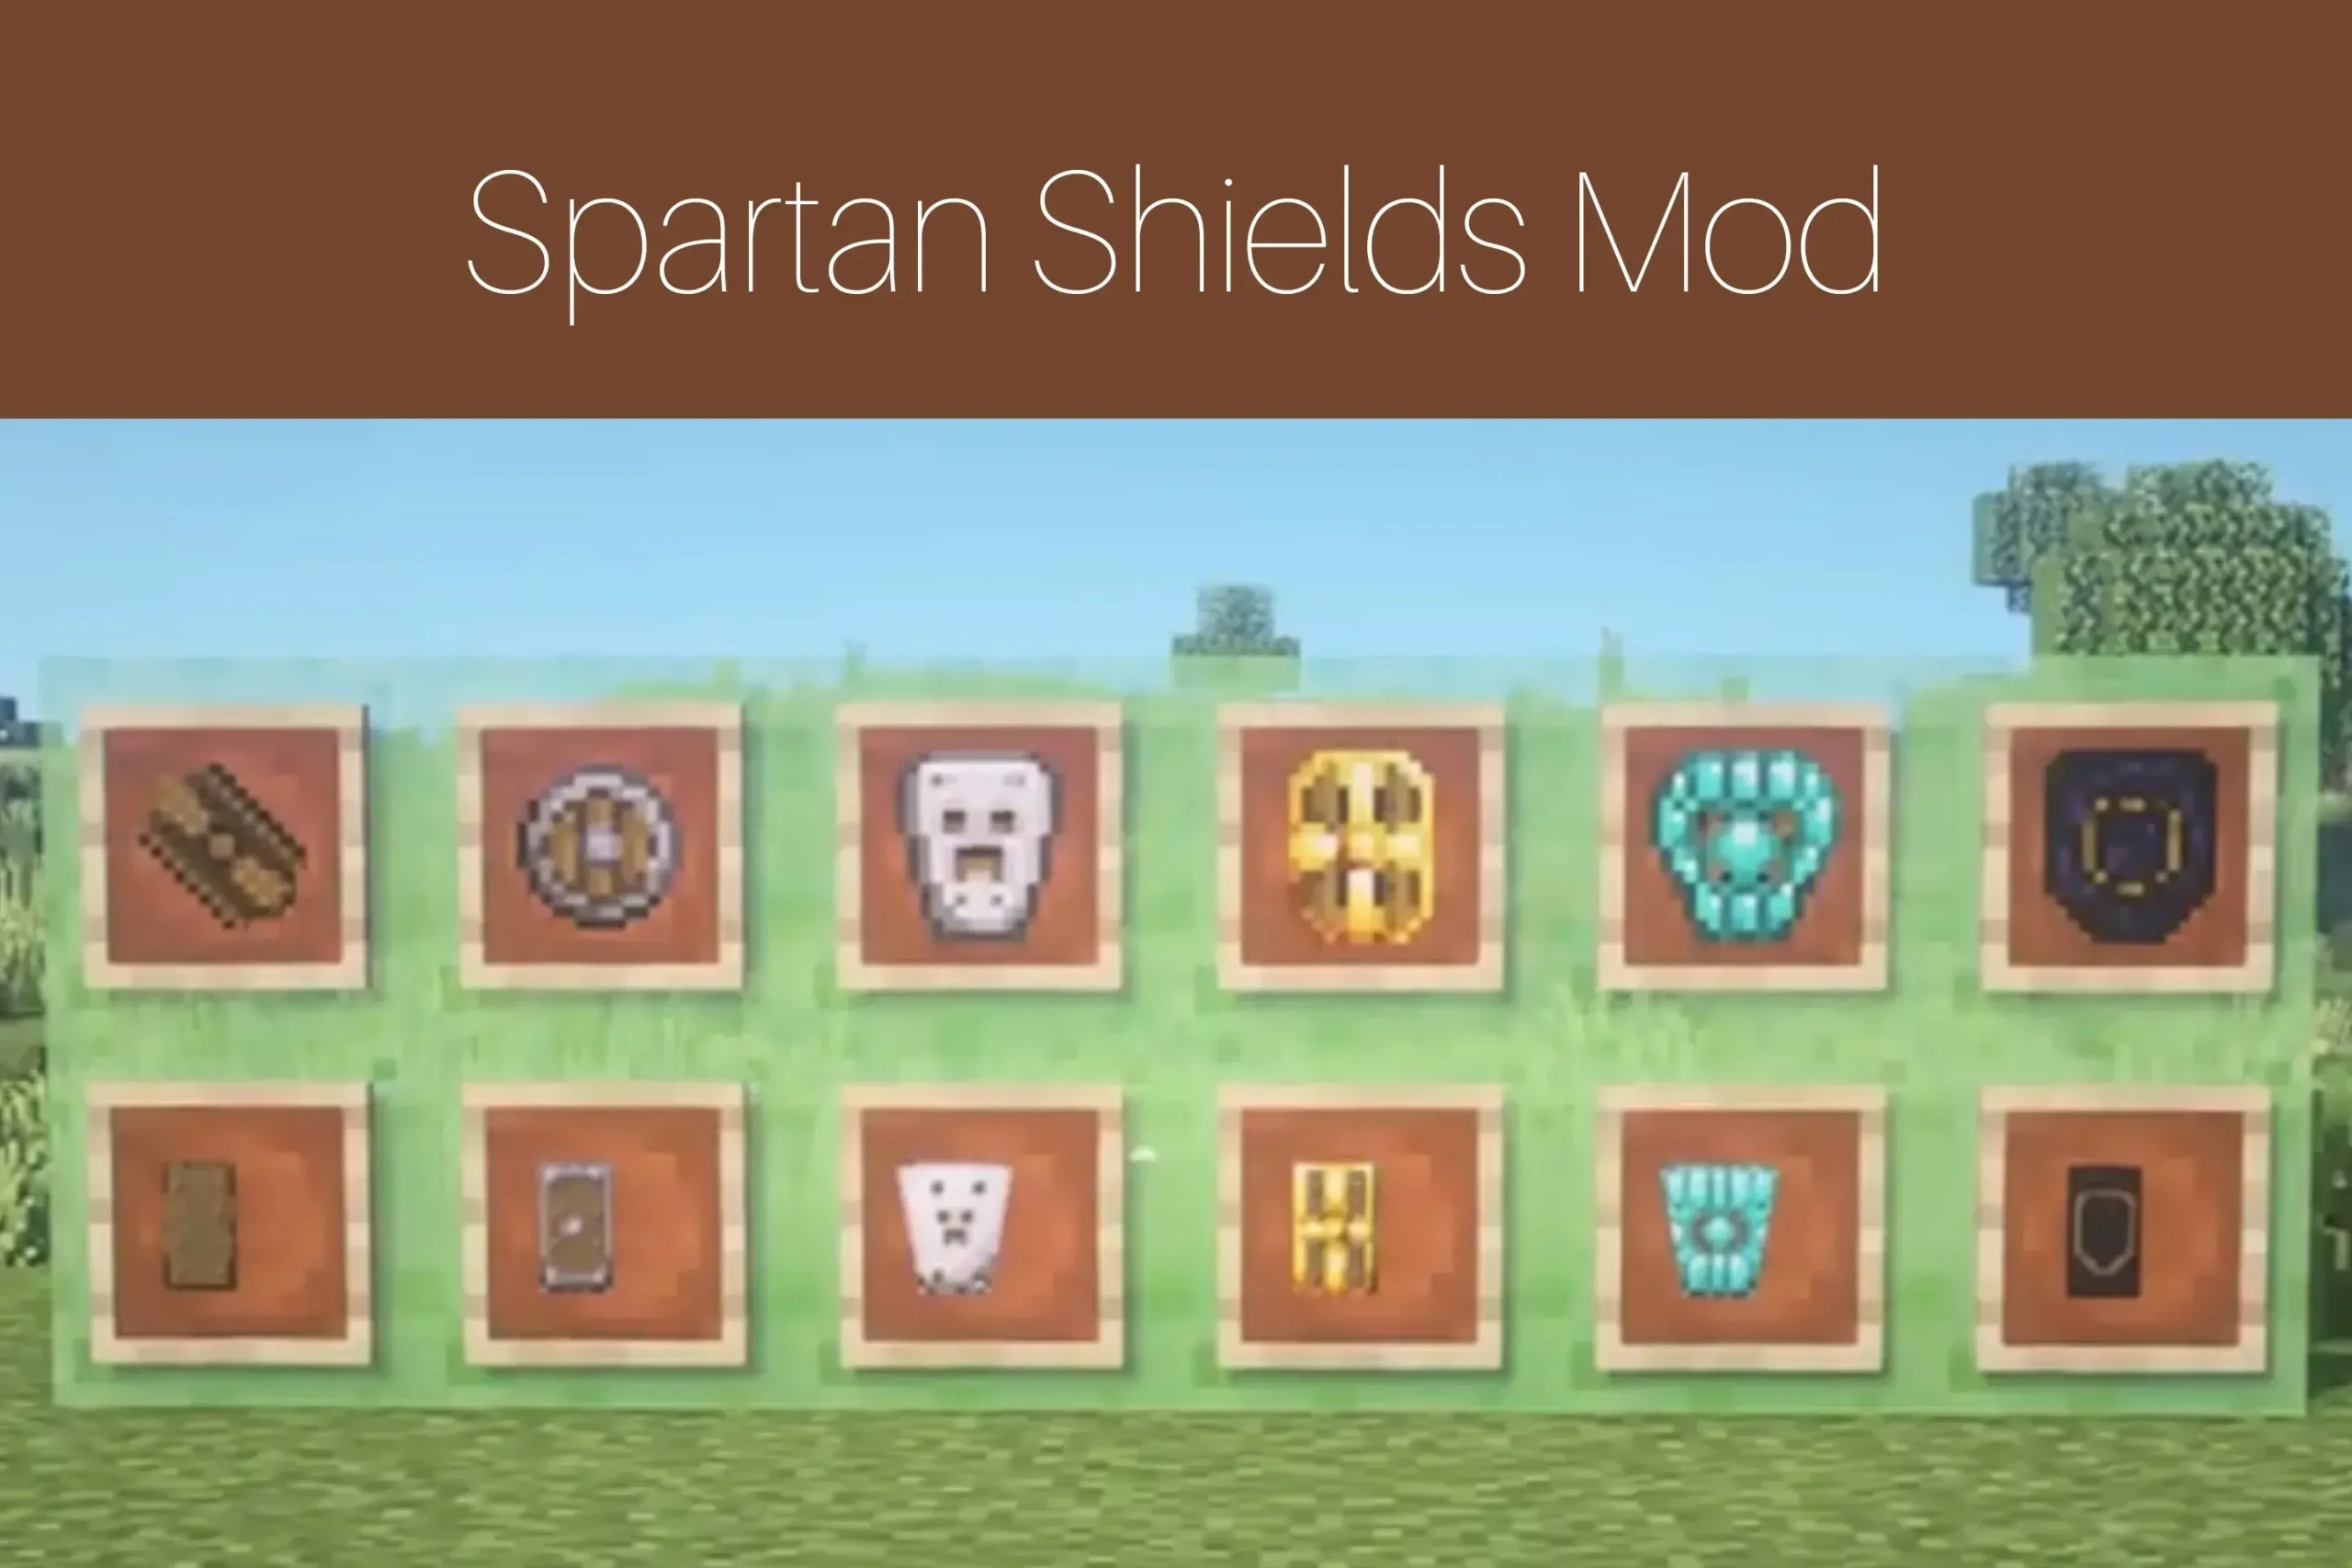 Spartan Shields Mod